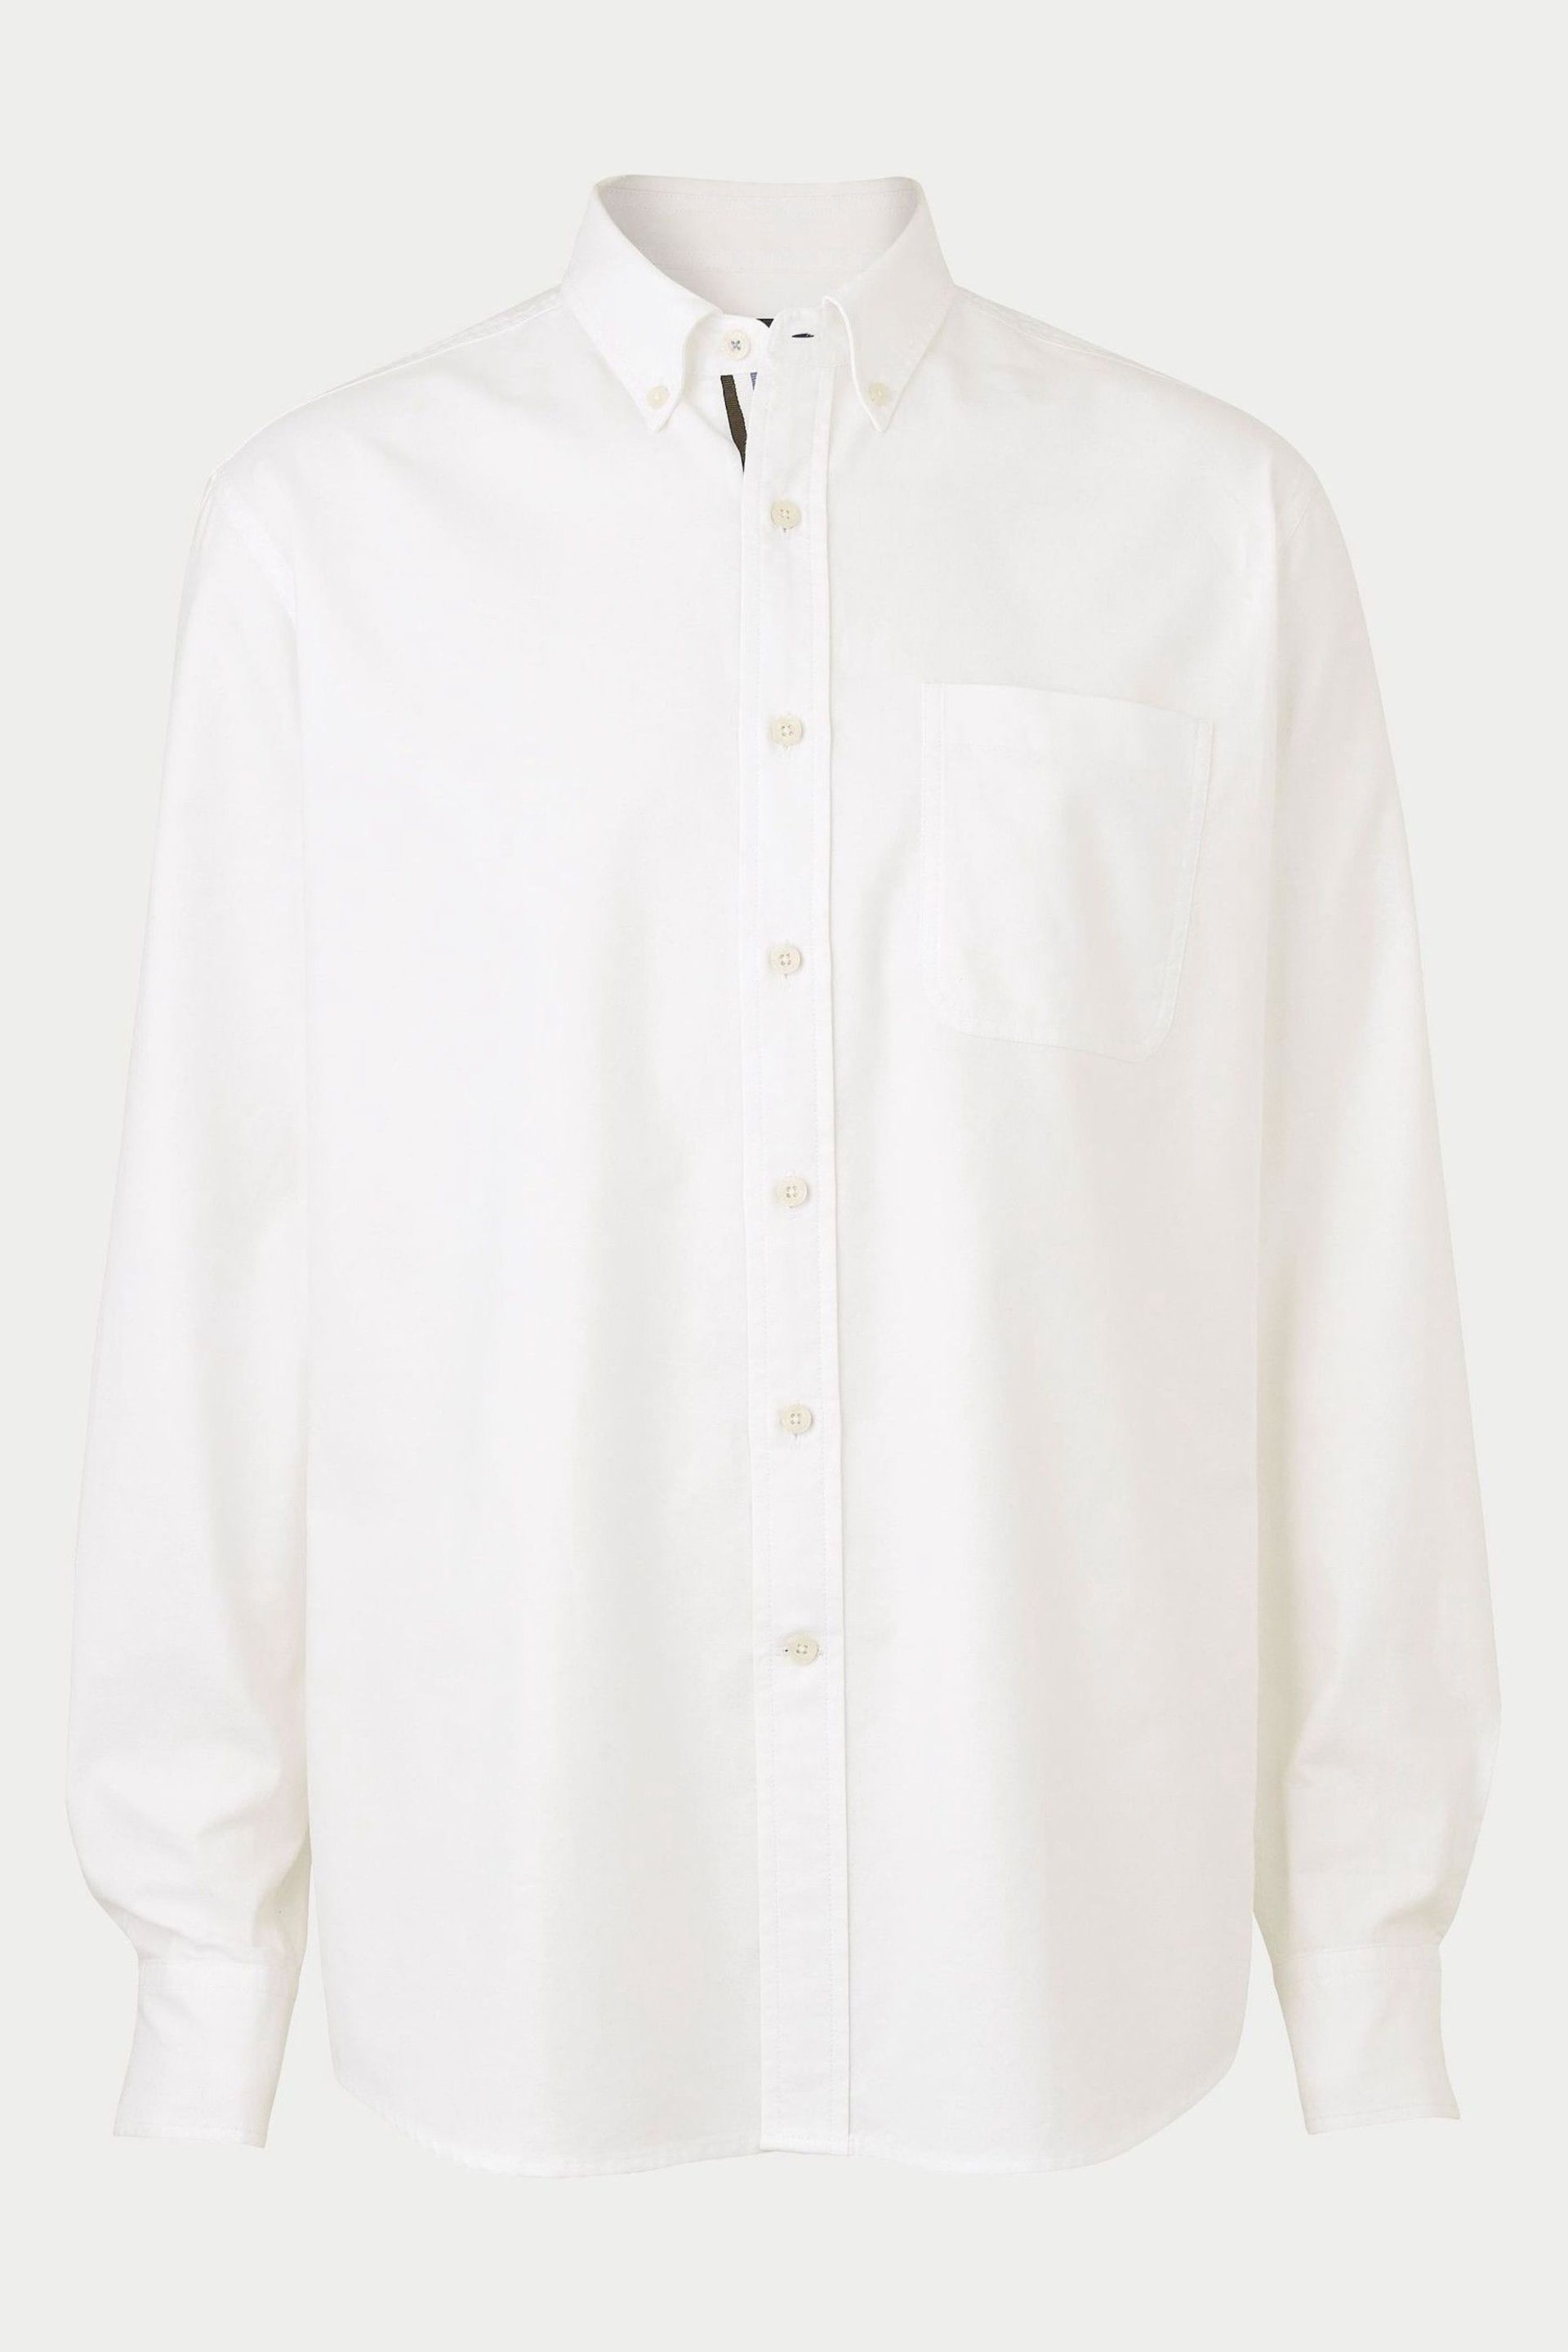 The Savile Row Company Stripe Placket Button Down Oxford White Shirt - Image 3 of 4